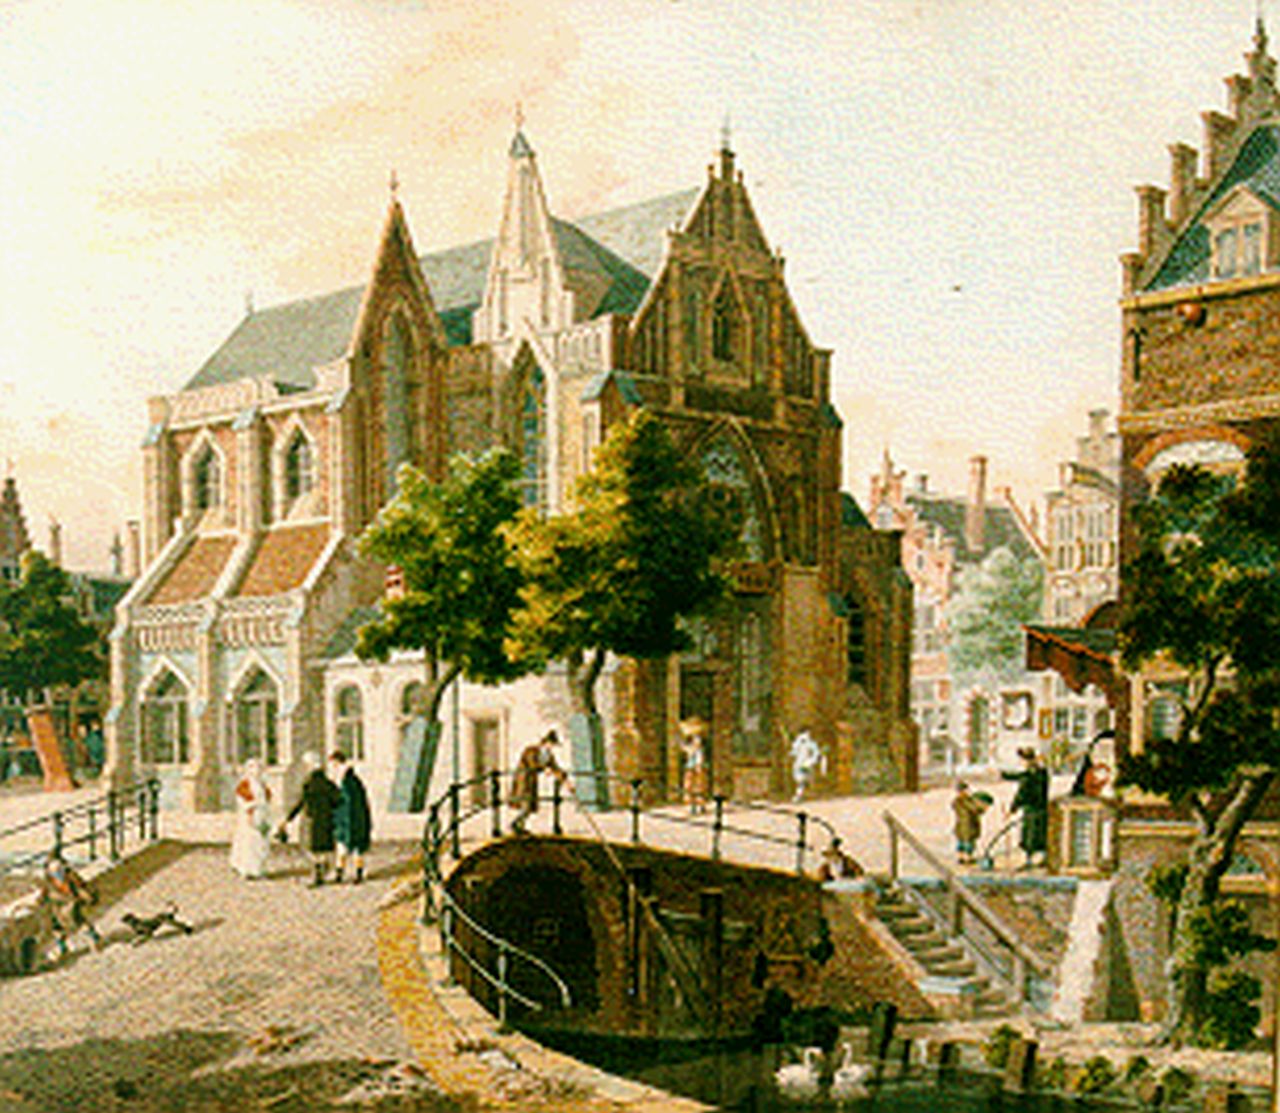 Verheijen J.H.  | Jan Hendrik Verheijen, Figures in a sunlit town, watercolour on paper 36.0 x 41.5 cm, signed l.c. and dated 1811